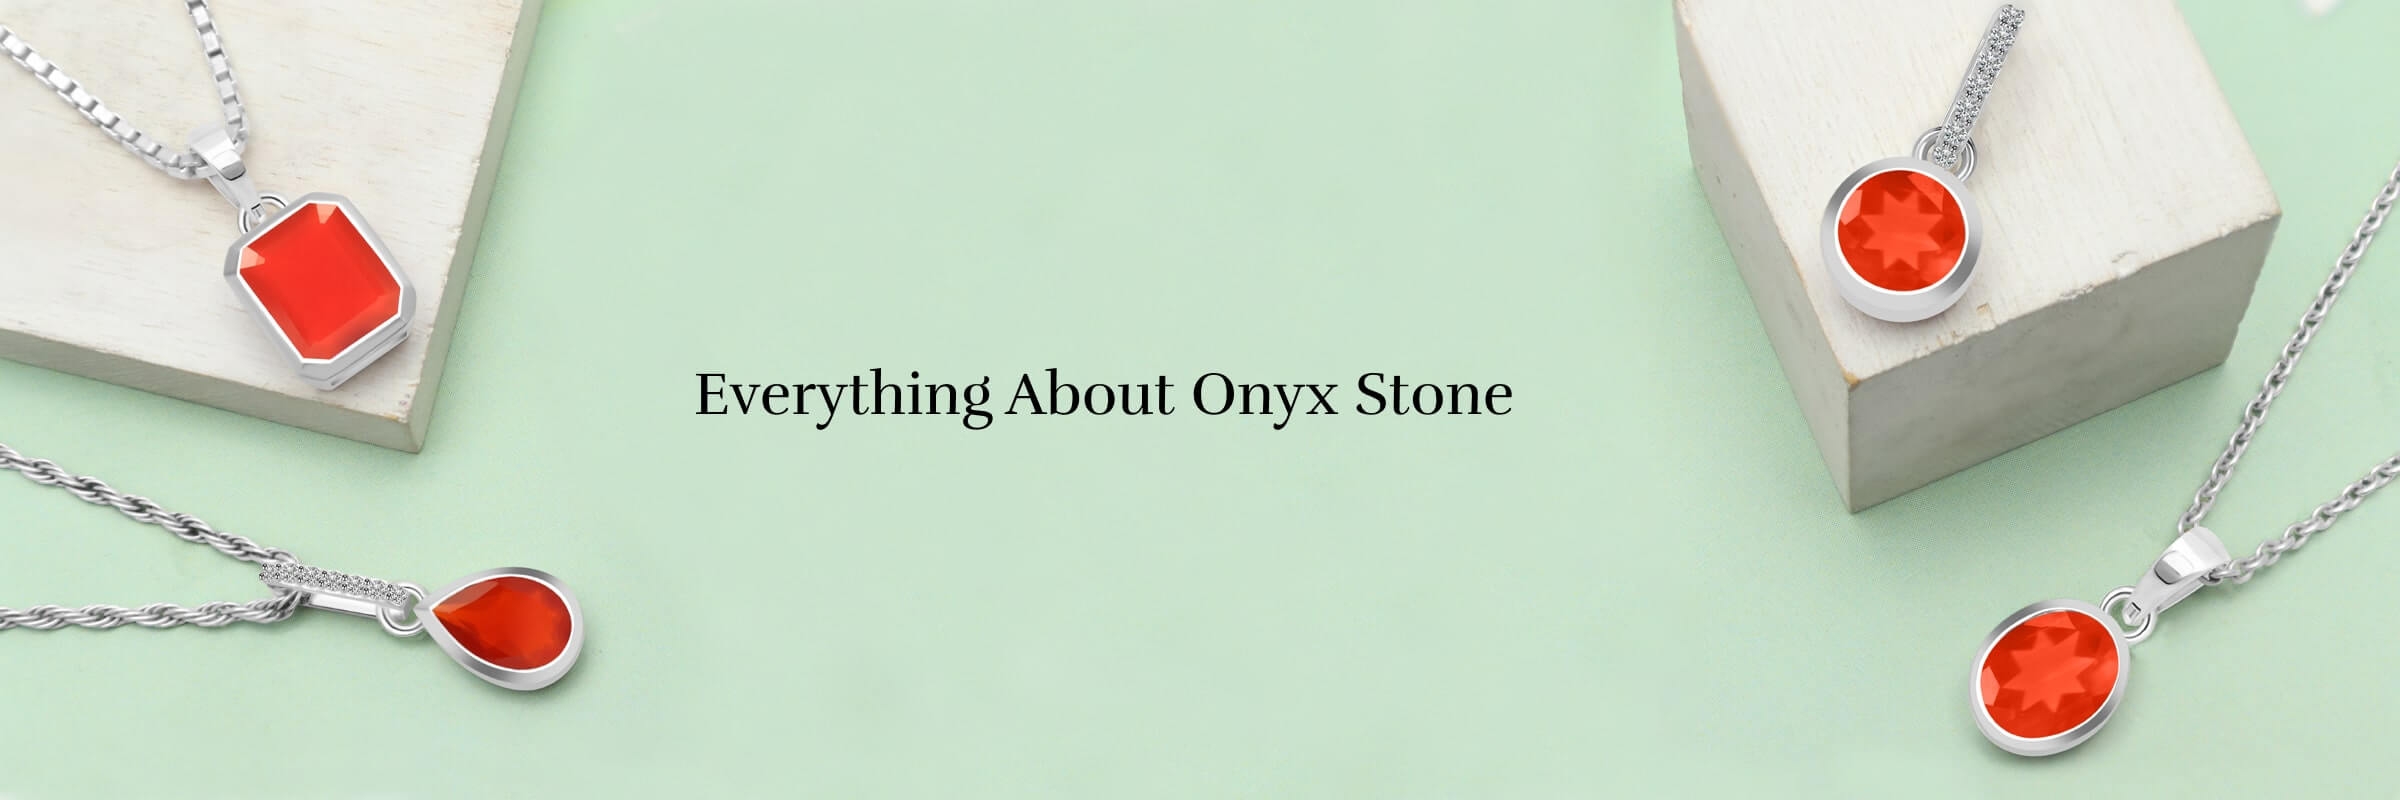 Onyx Stone Meaning & Benefits